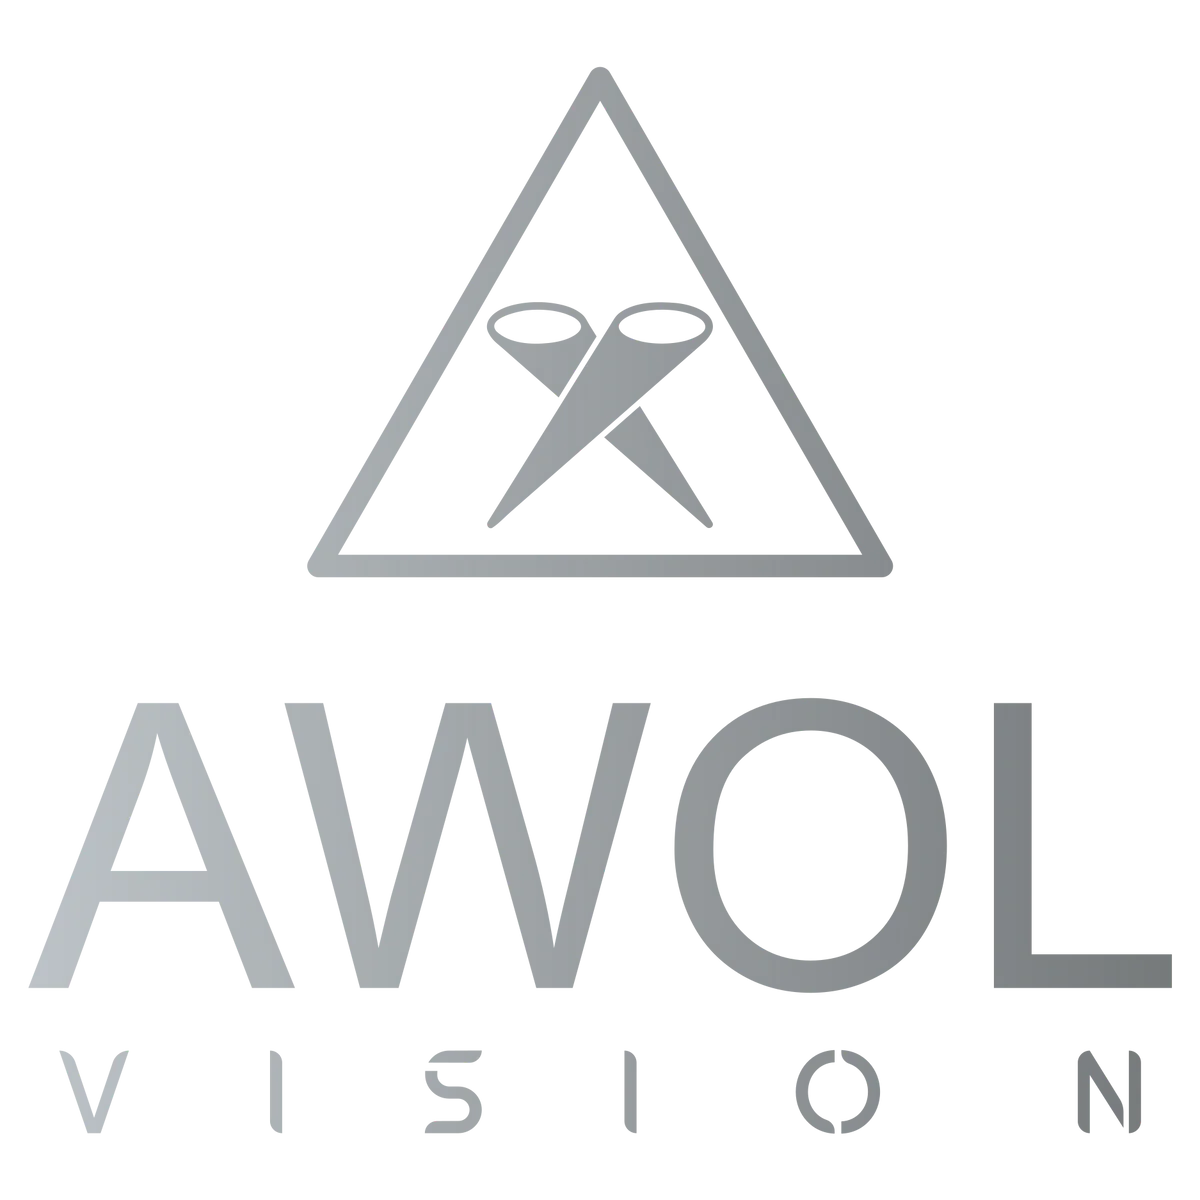 AWOL Vision